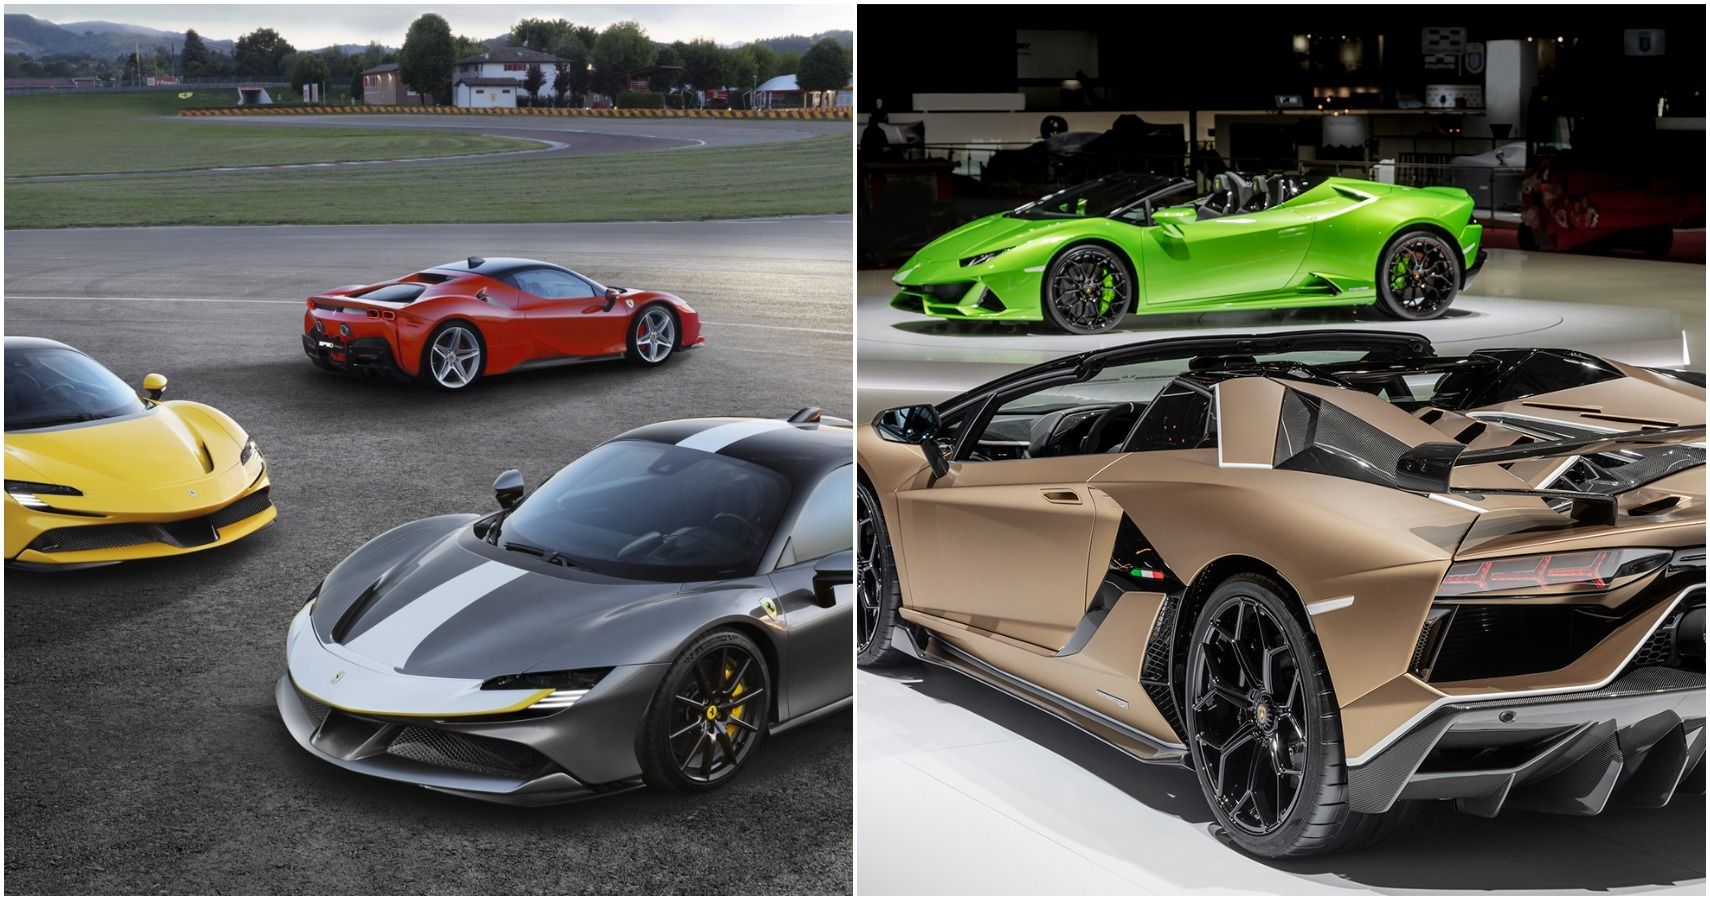 8 Wild Differences Between The Lamborghini And Ferrari Rivalry